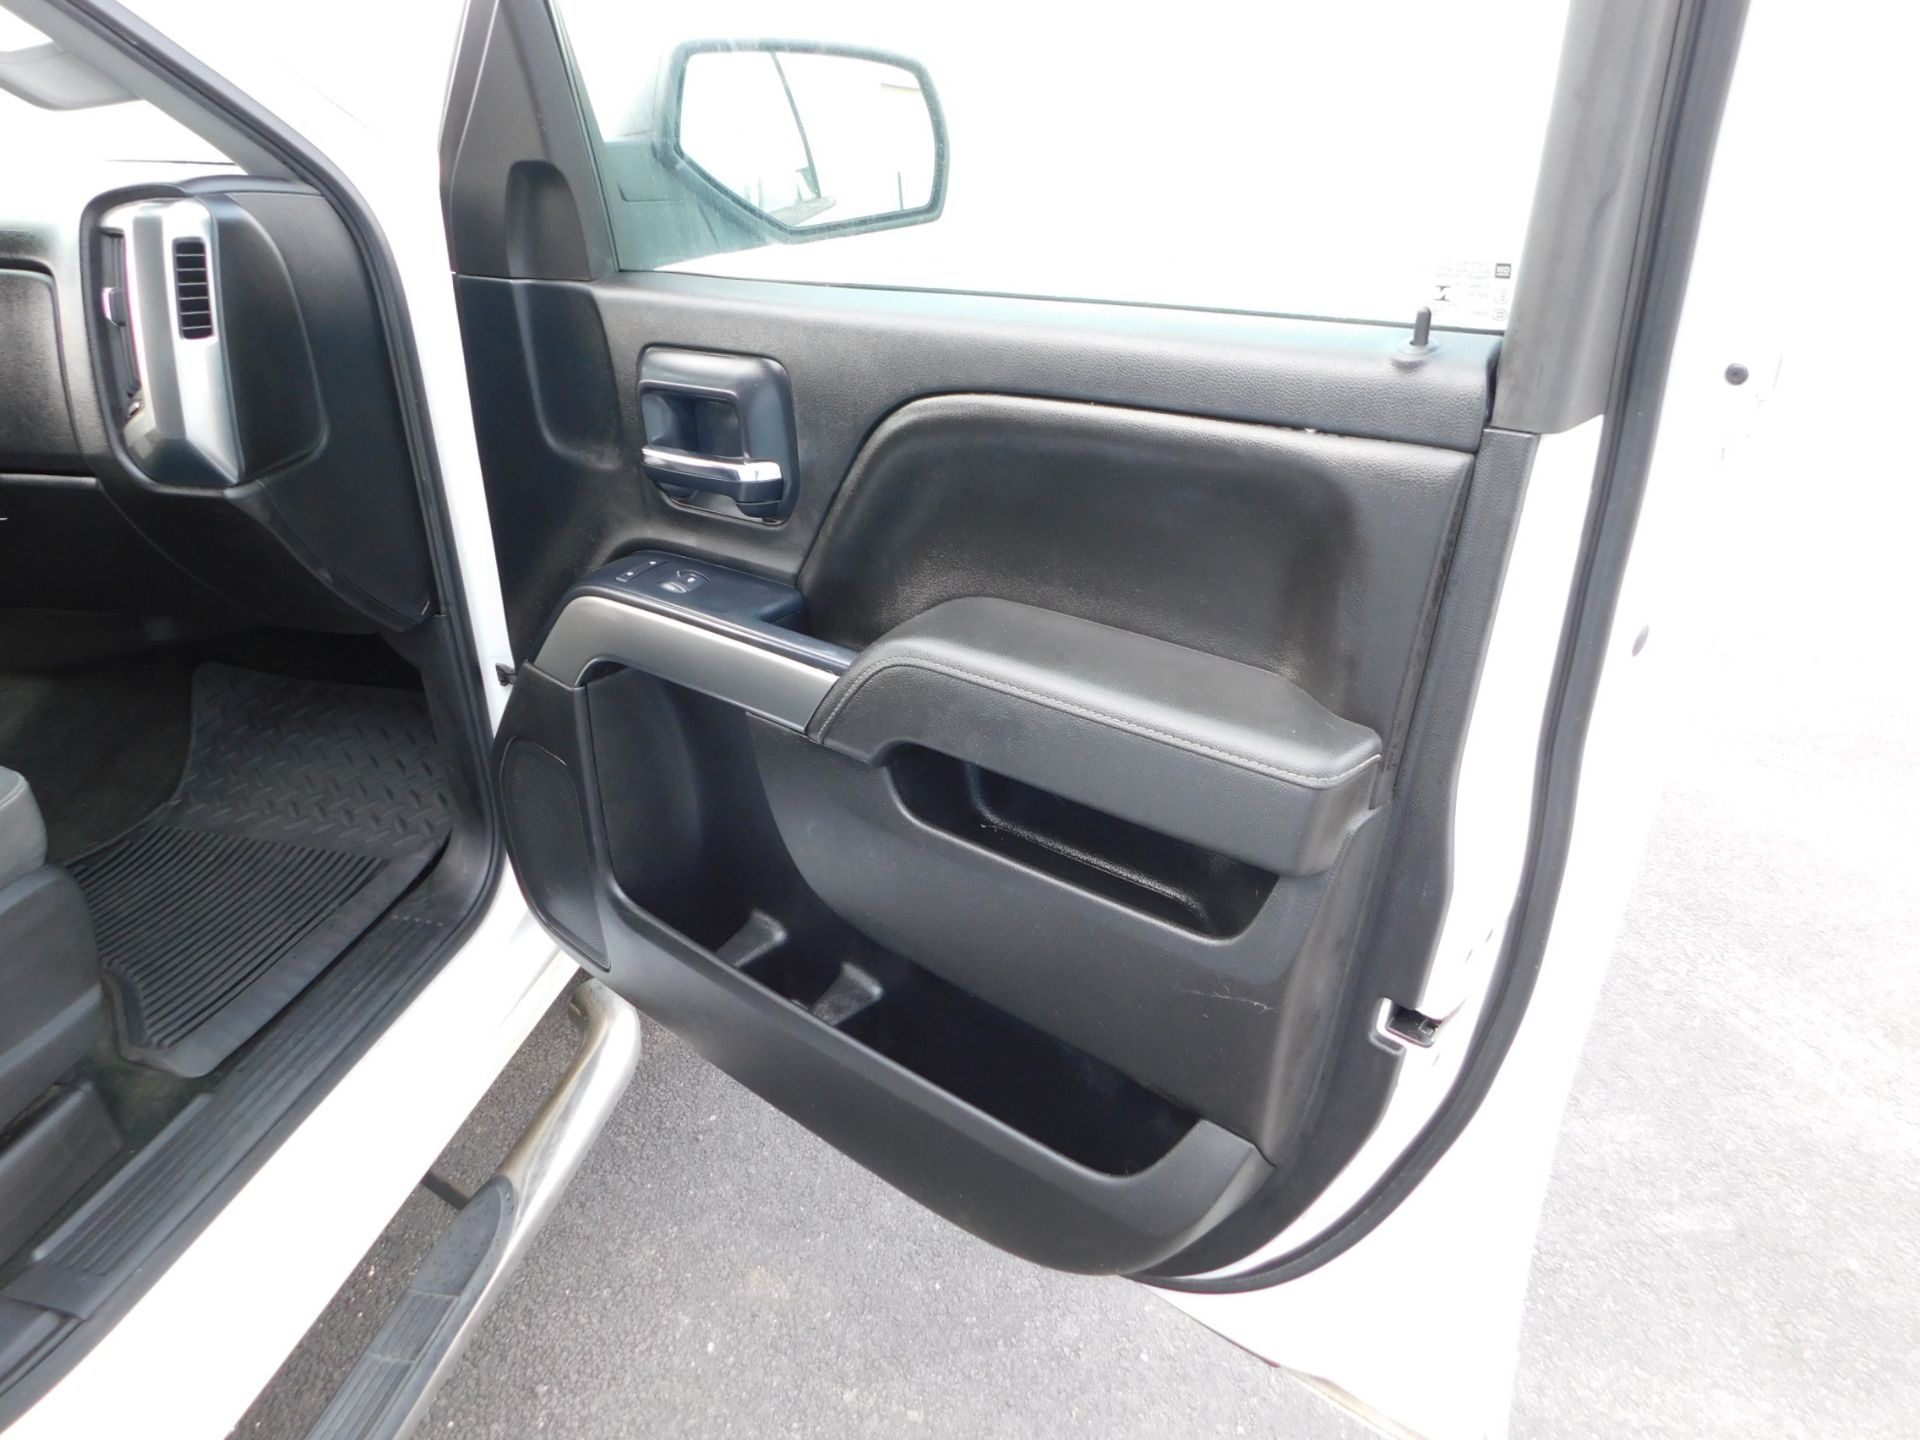 2014 Chevrolet Silverado LT Pickup, VIN 1GCVKREC3EZ139405, 4-Door 4 WD, Automatic, AM/FM, AC, Cruise - Image 40 of 51